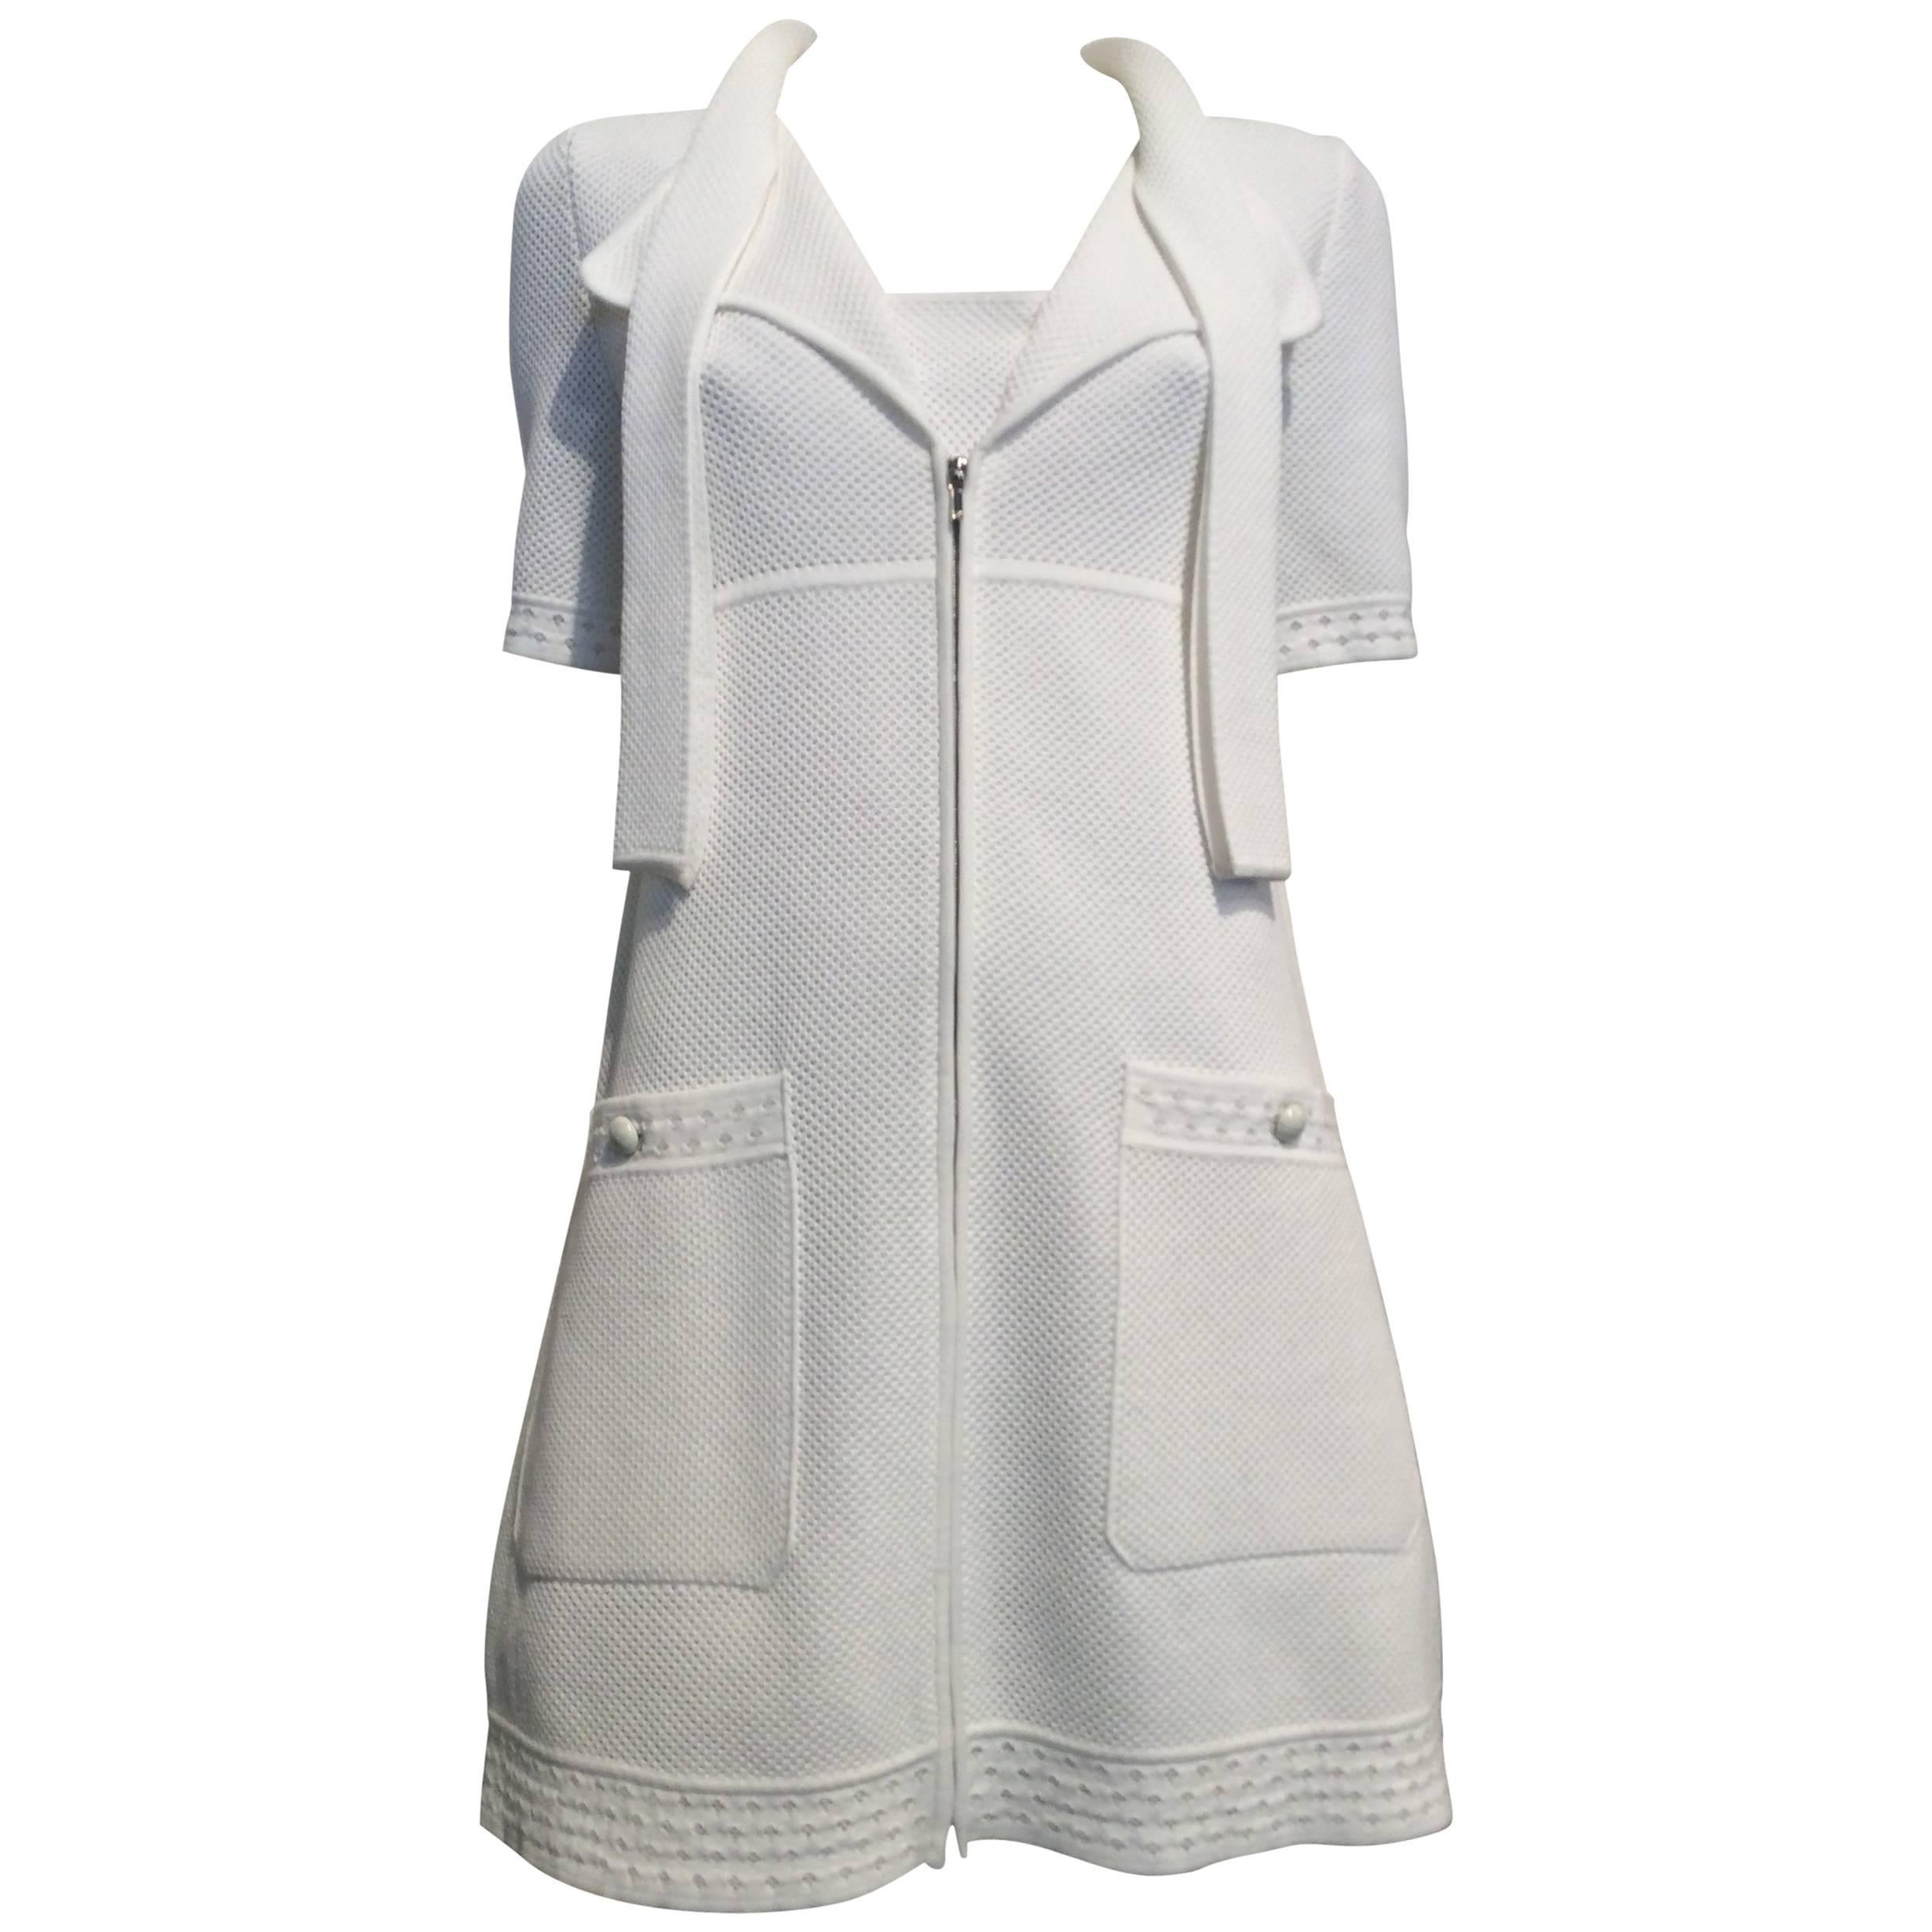 Chanel White Cotton Pique Dress Size 6